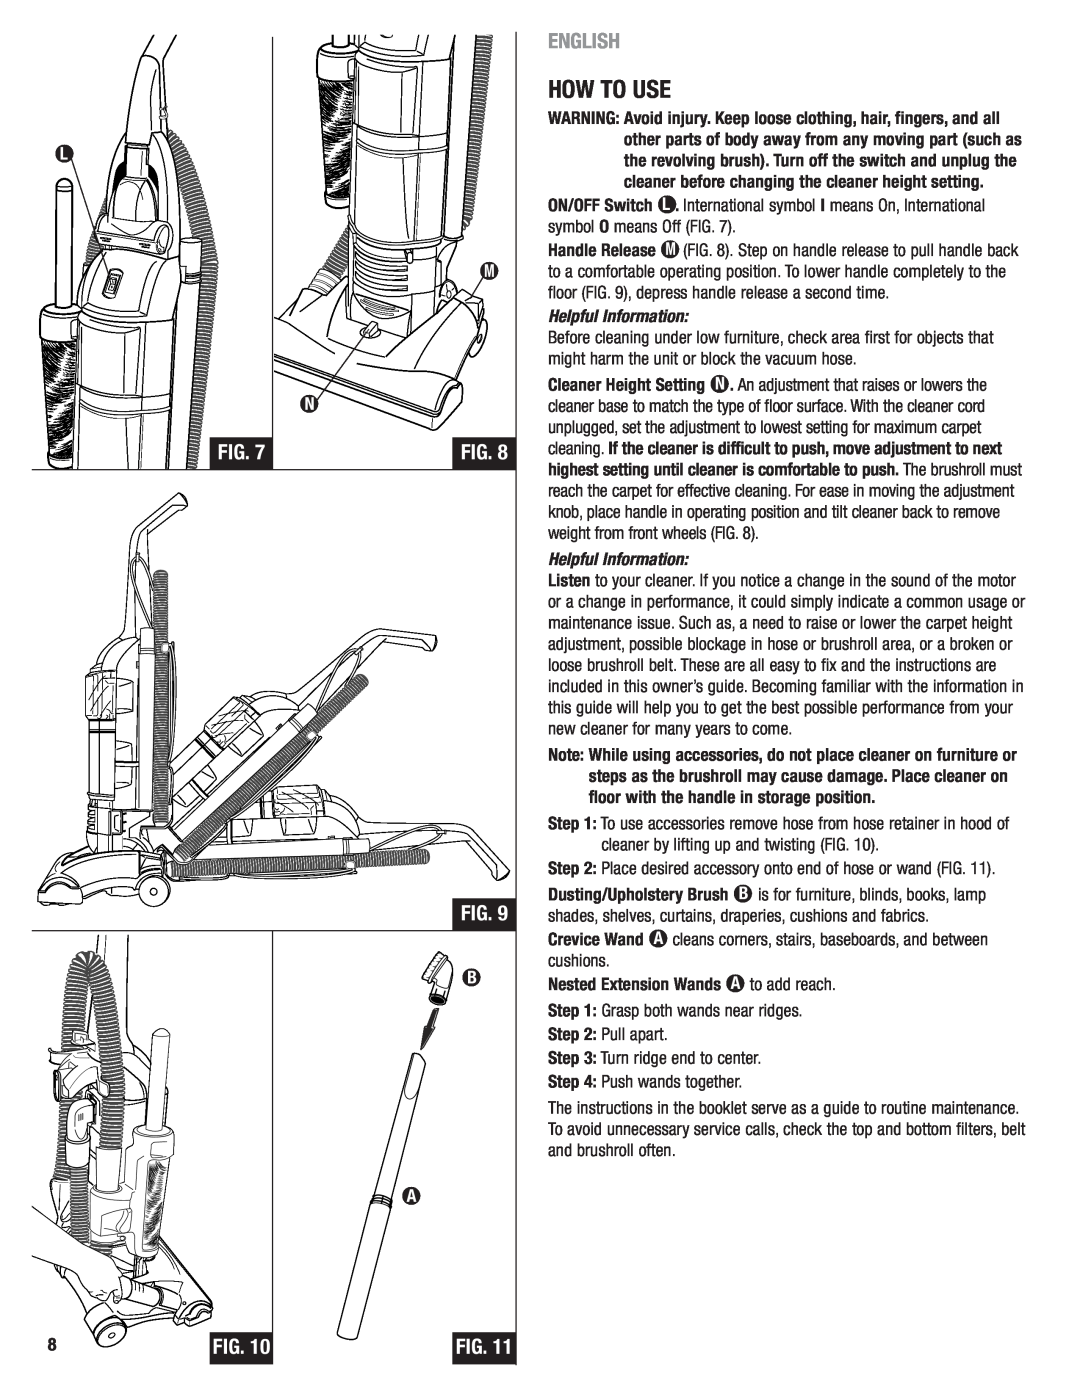 Eureka 2940 manual How To Use, English, Helpful Information 